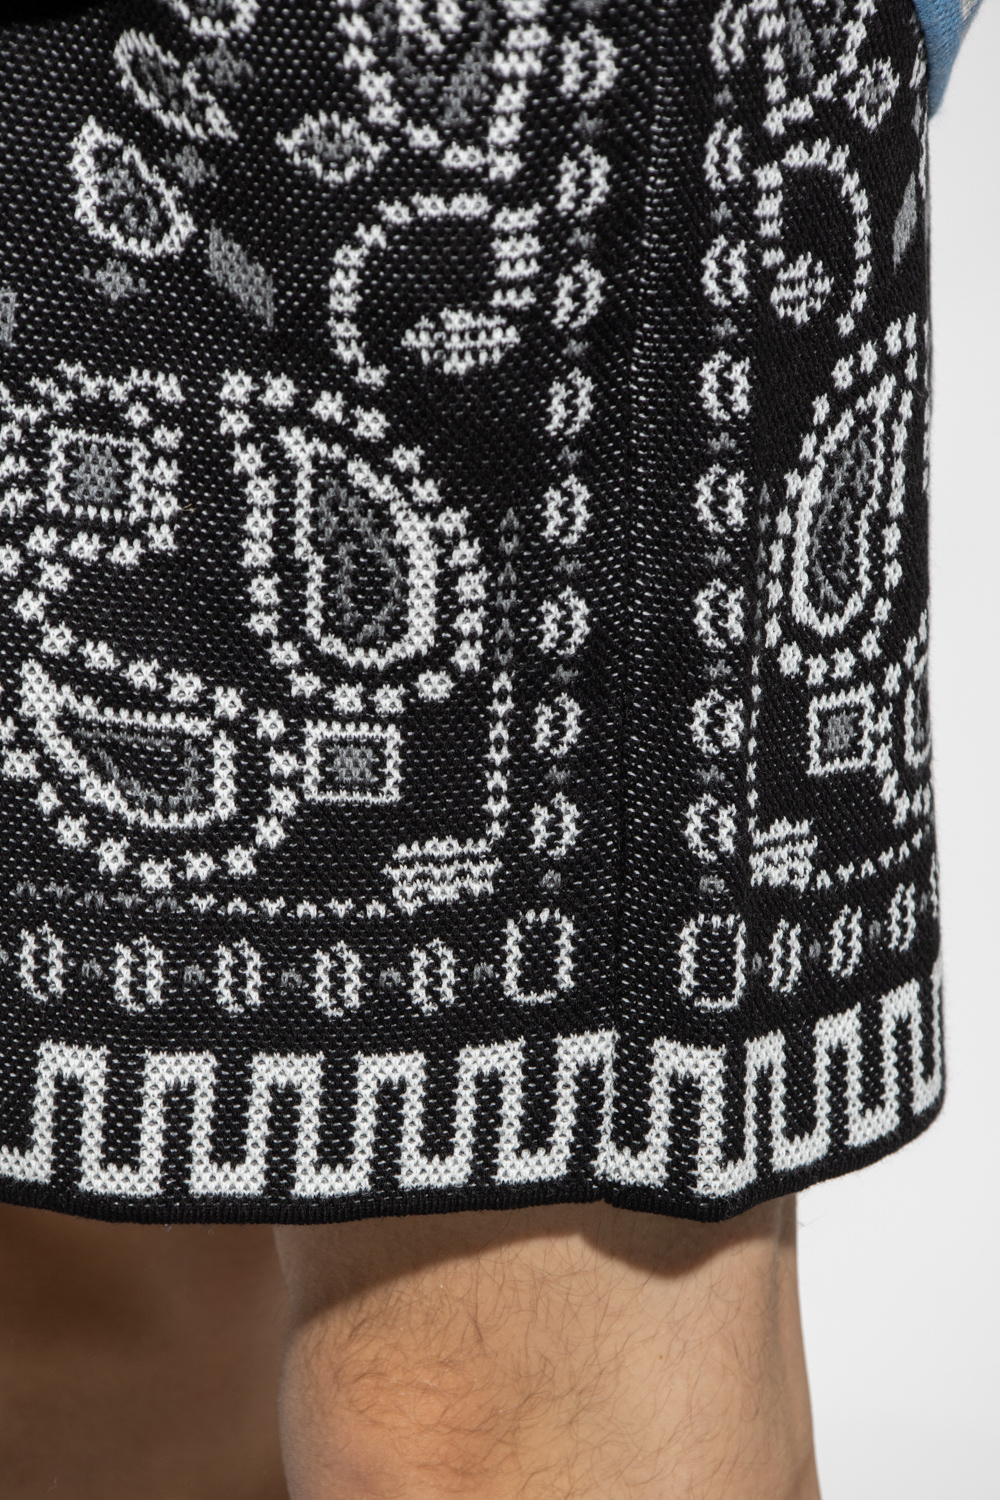 Alanui Low shorts with paisley motif